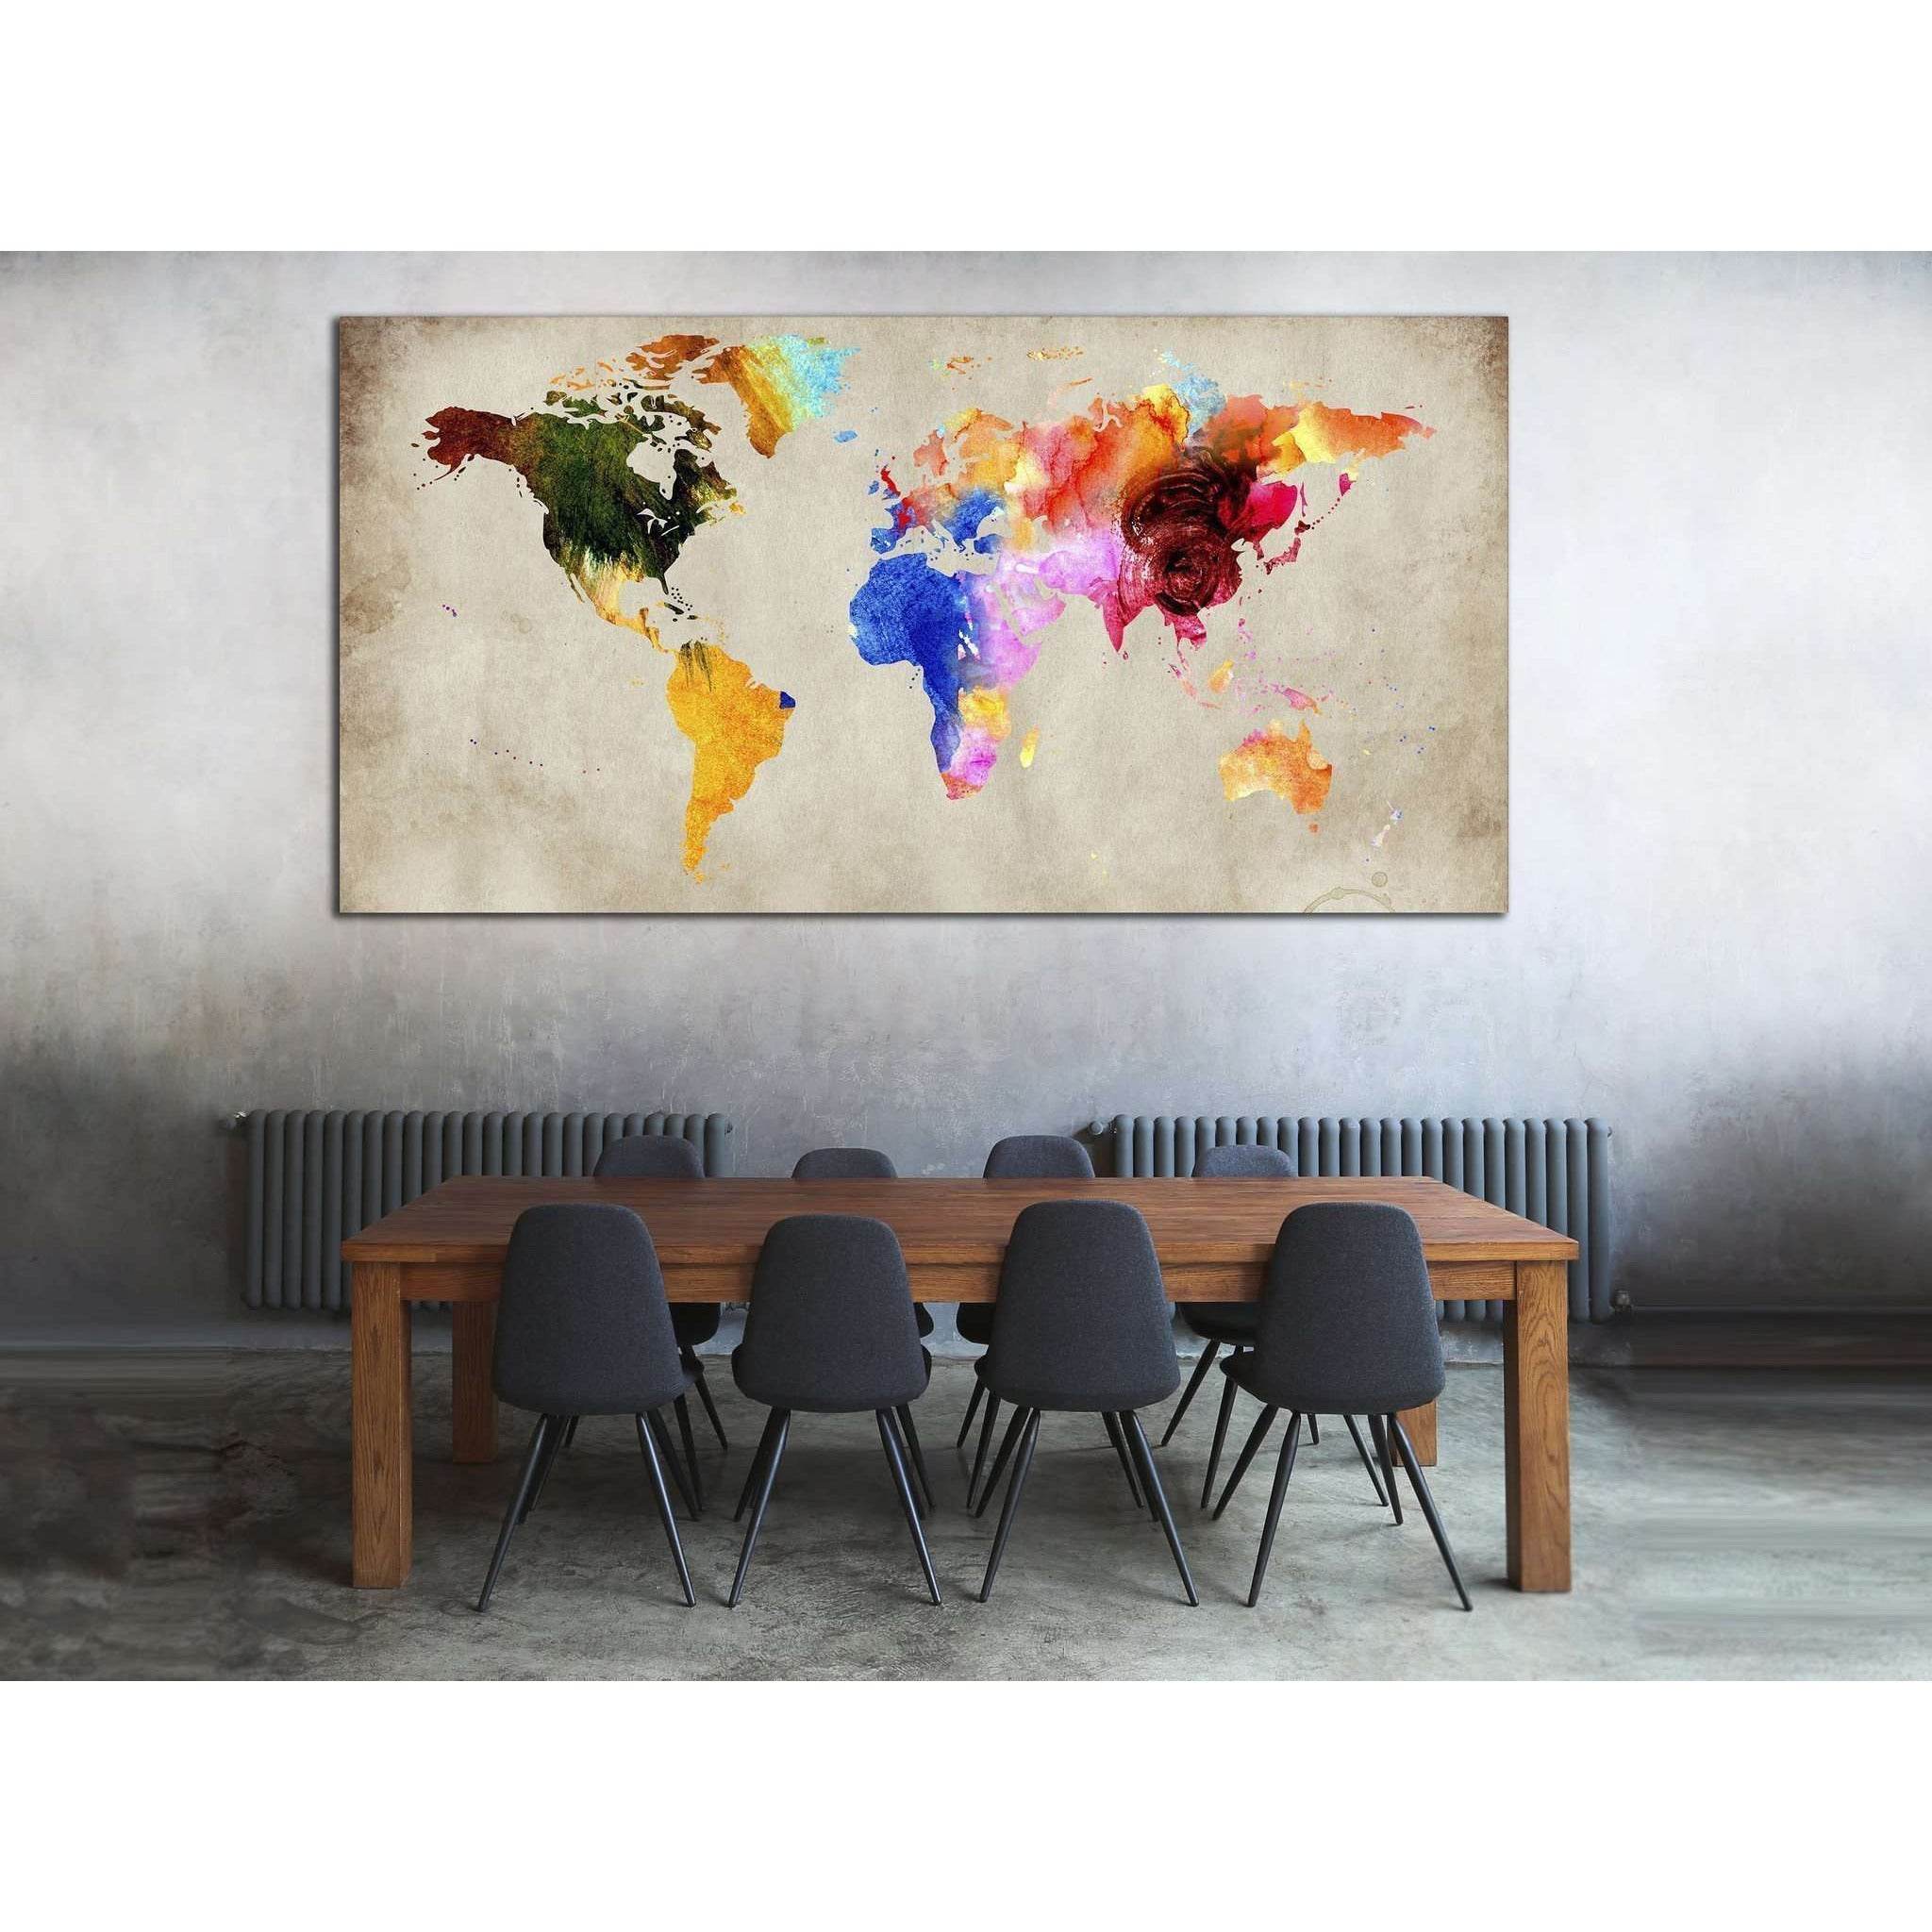 Colorful Watercolor World Map Wall Decor